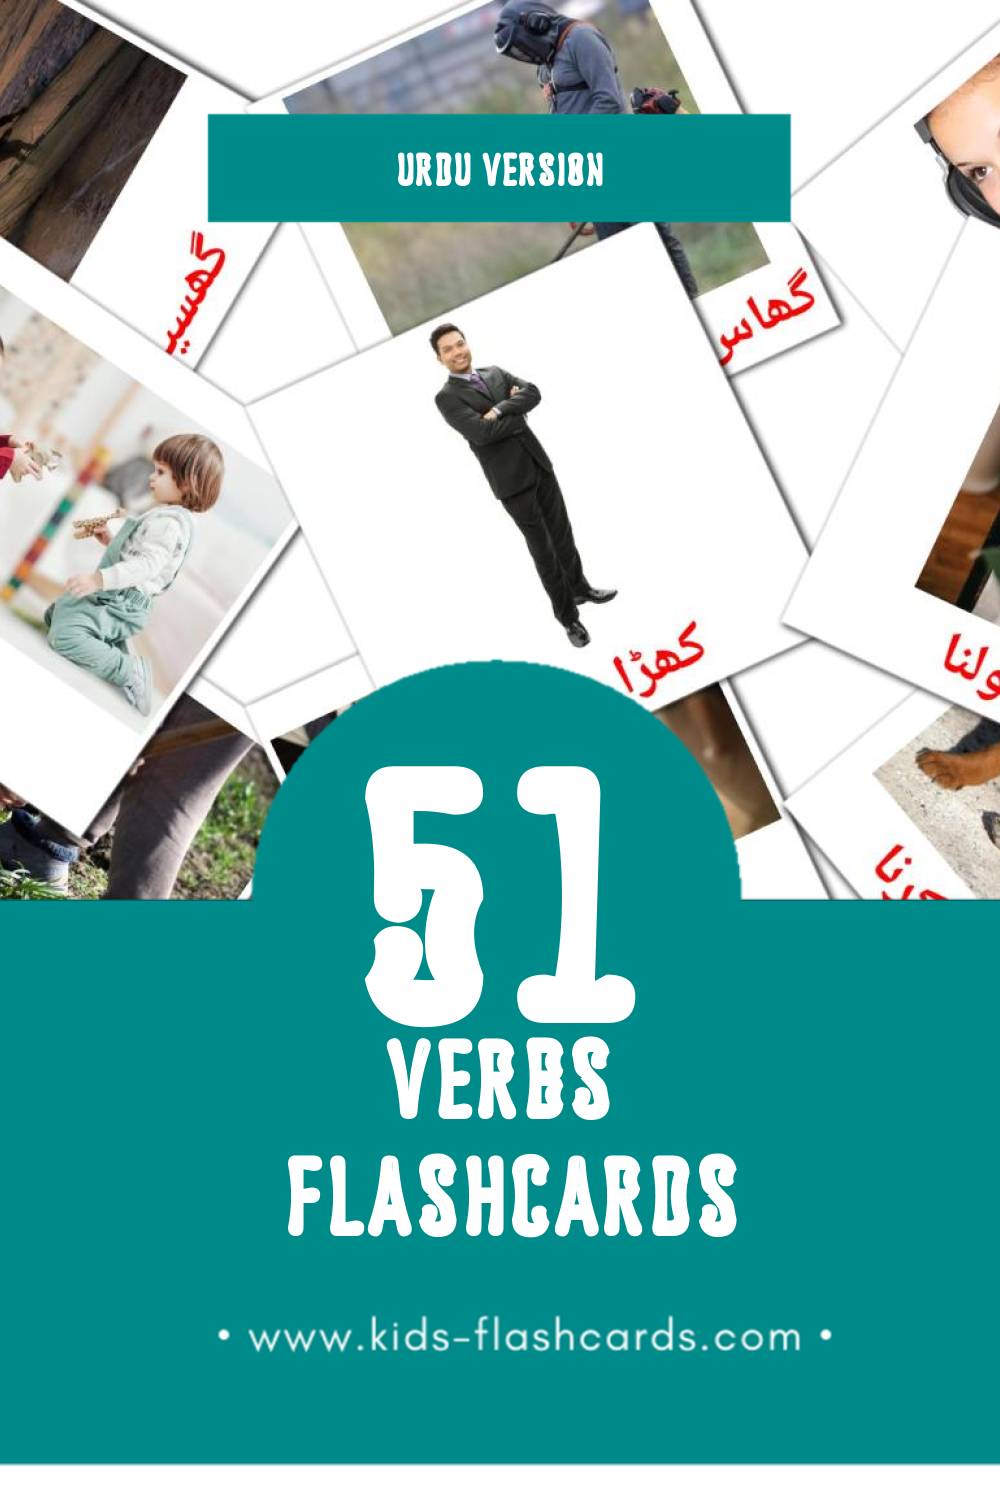 Visual افعال Flashcards for Toddlers (54 cards in Urdu)